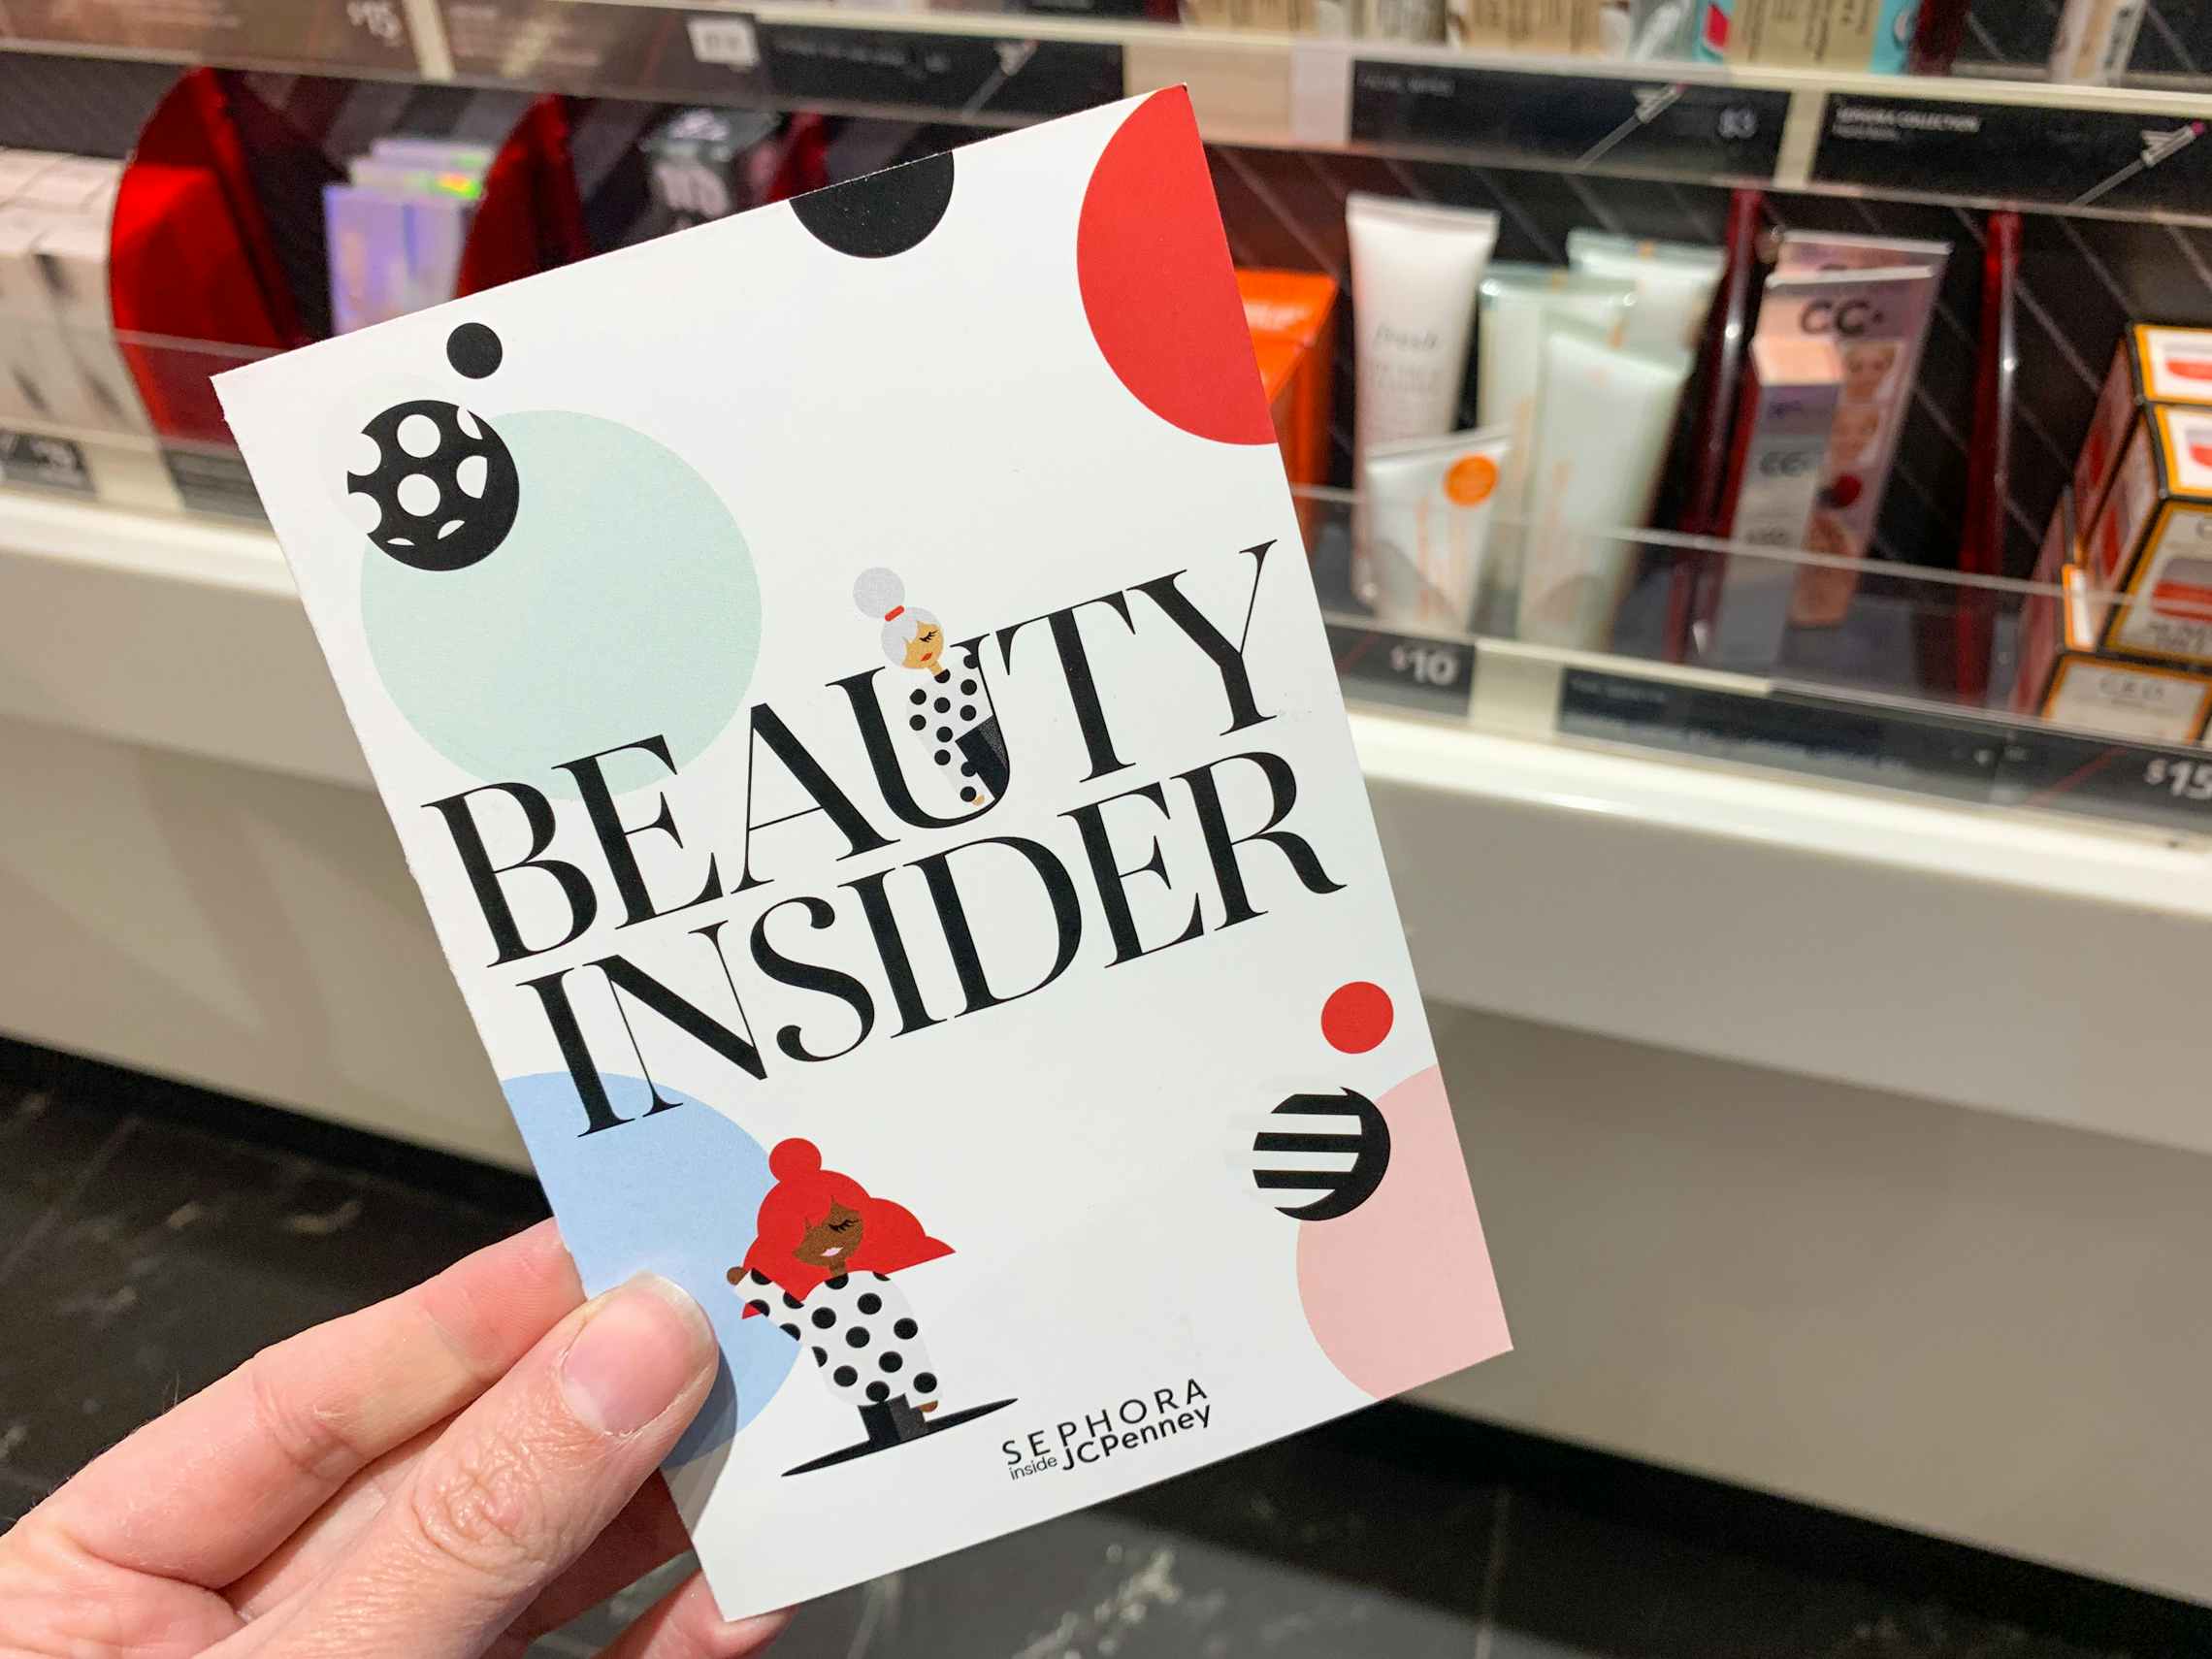 A Sephora insider brochure held near checkout